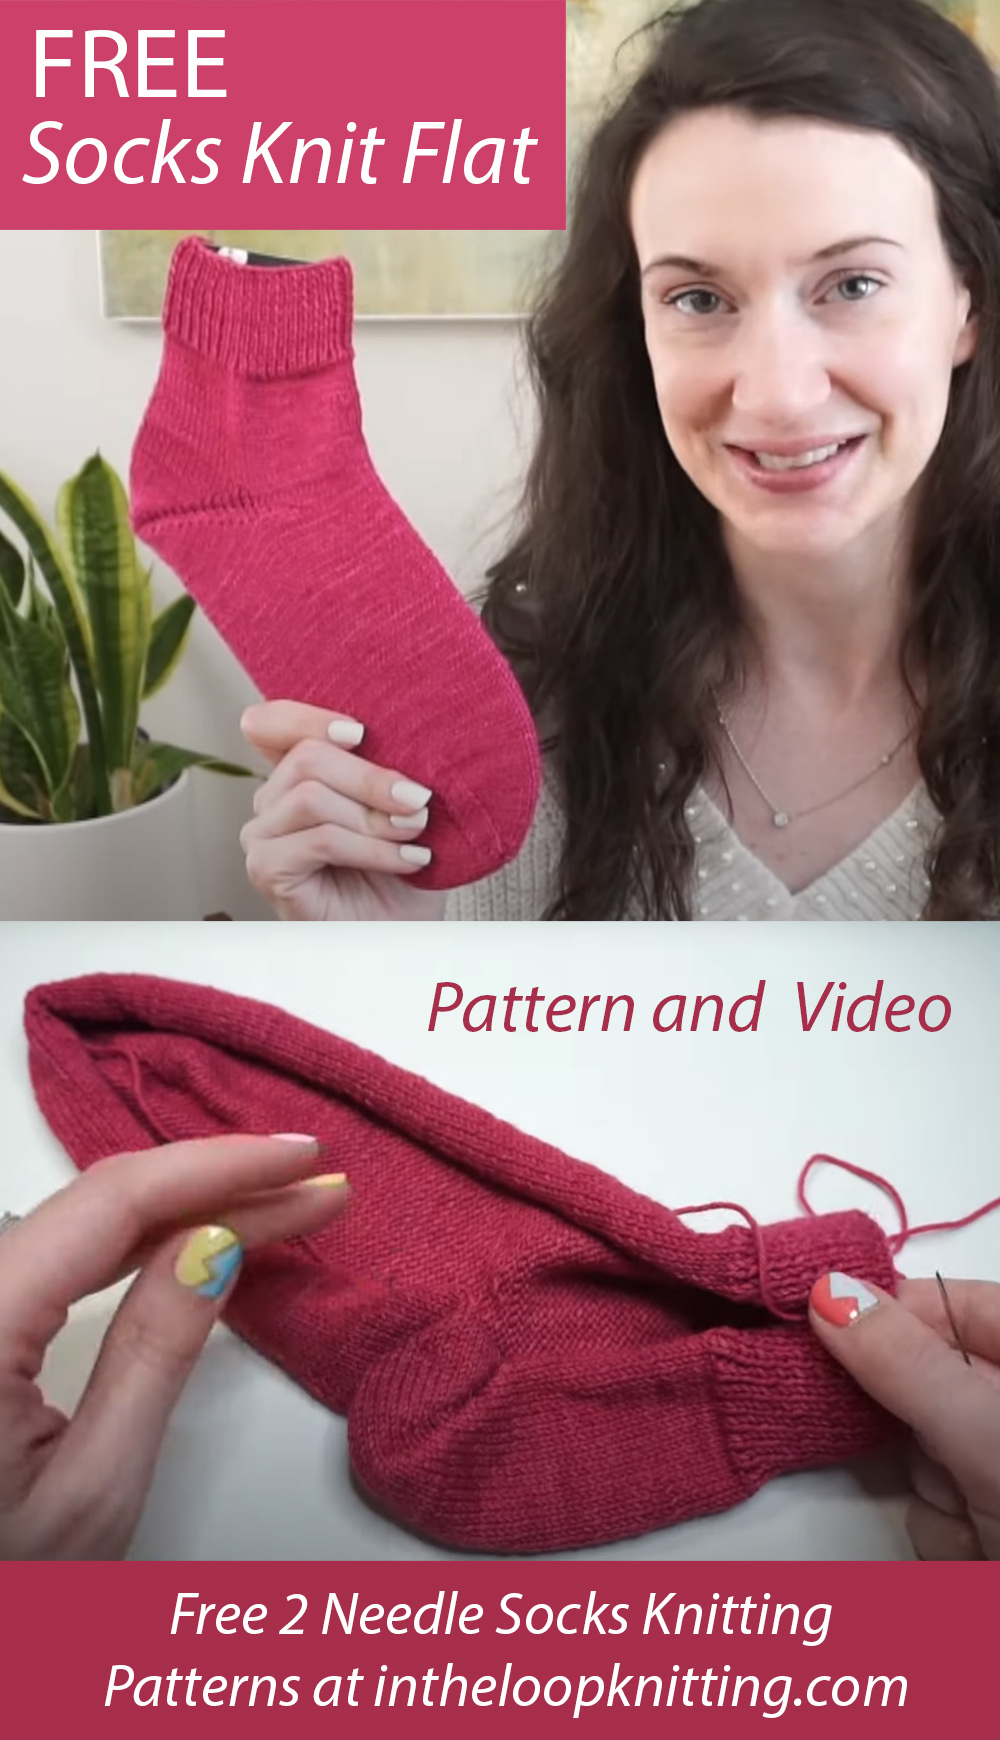 Free Socks Knit Flat Knitting Pattern With Video